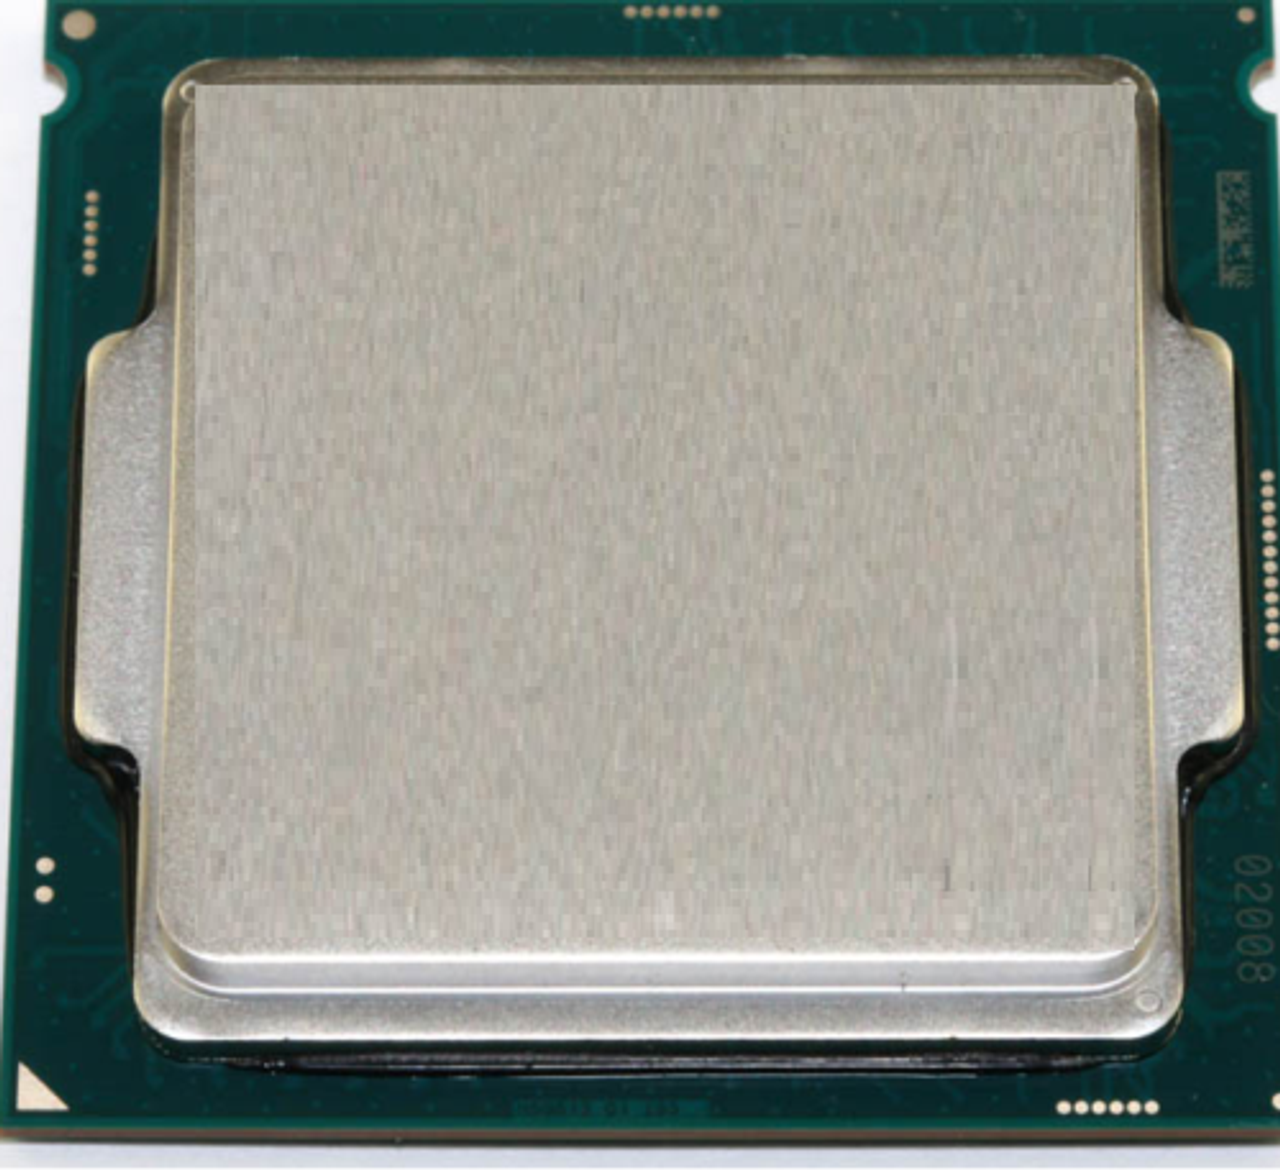 Интел 7100. Процессор Intel Core i3-7300. I3 7300. Системник Iru Intel(r) Core(TM) i3-8100 CPU @ 3.60GHZ 3.60 GHZ. I3 7300 какой сокет.